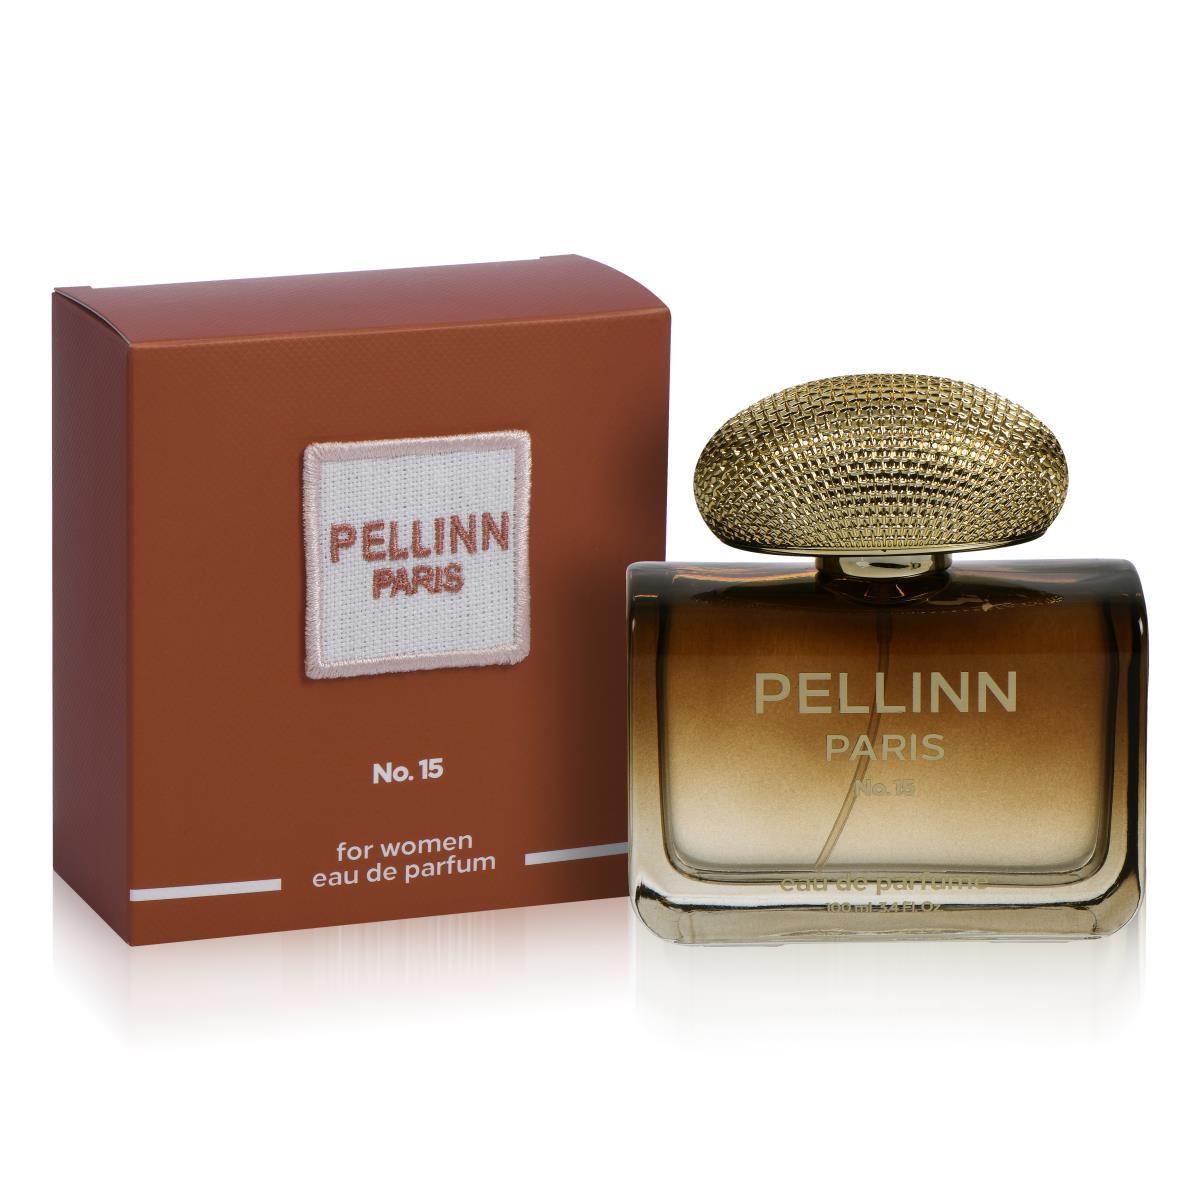 Pellinn Paris No.15 Çiçeksi ve Oryantal Kadın EDP Parfüm 100 ml  Pellinn Paris Parfüm